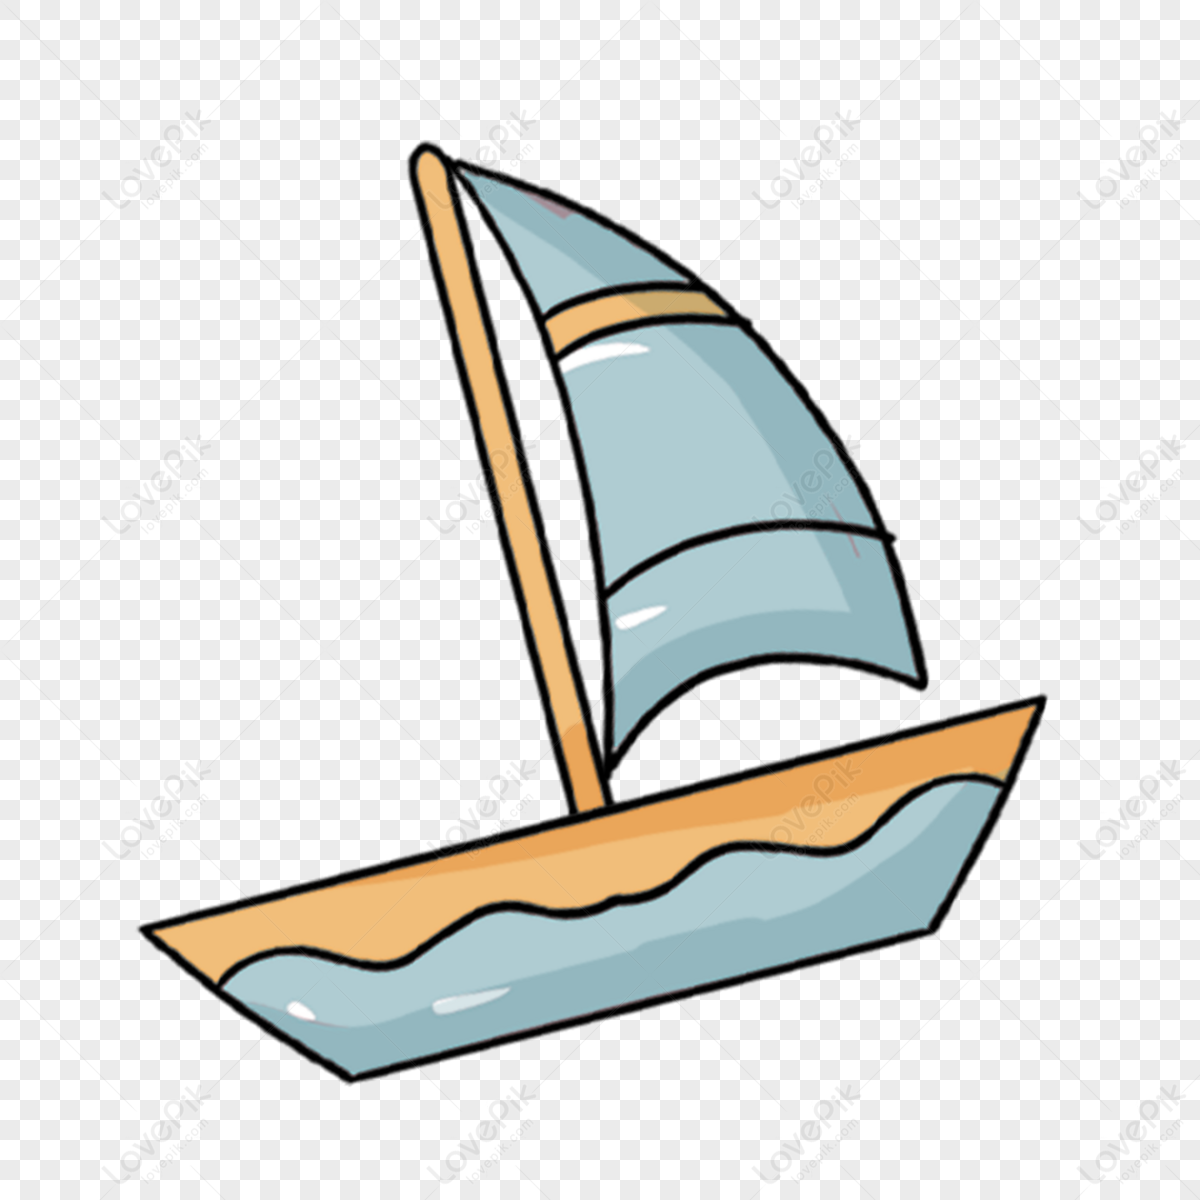 Blue orange hand drawn cartoon sailboat,cute,with orange in hand png image